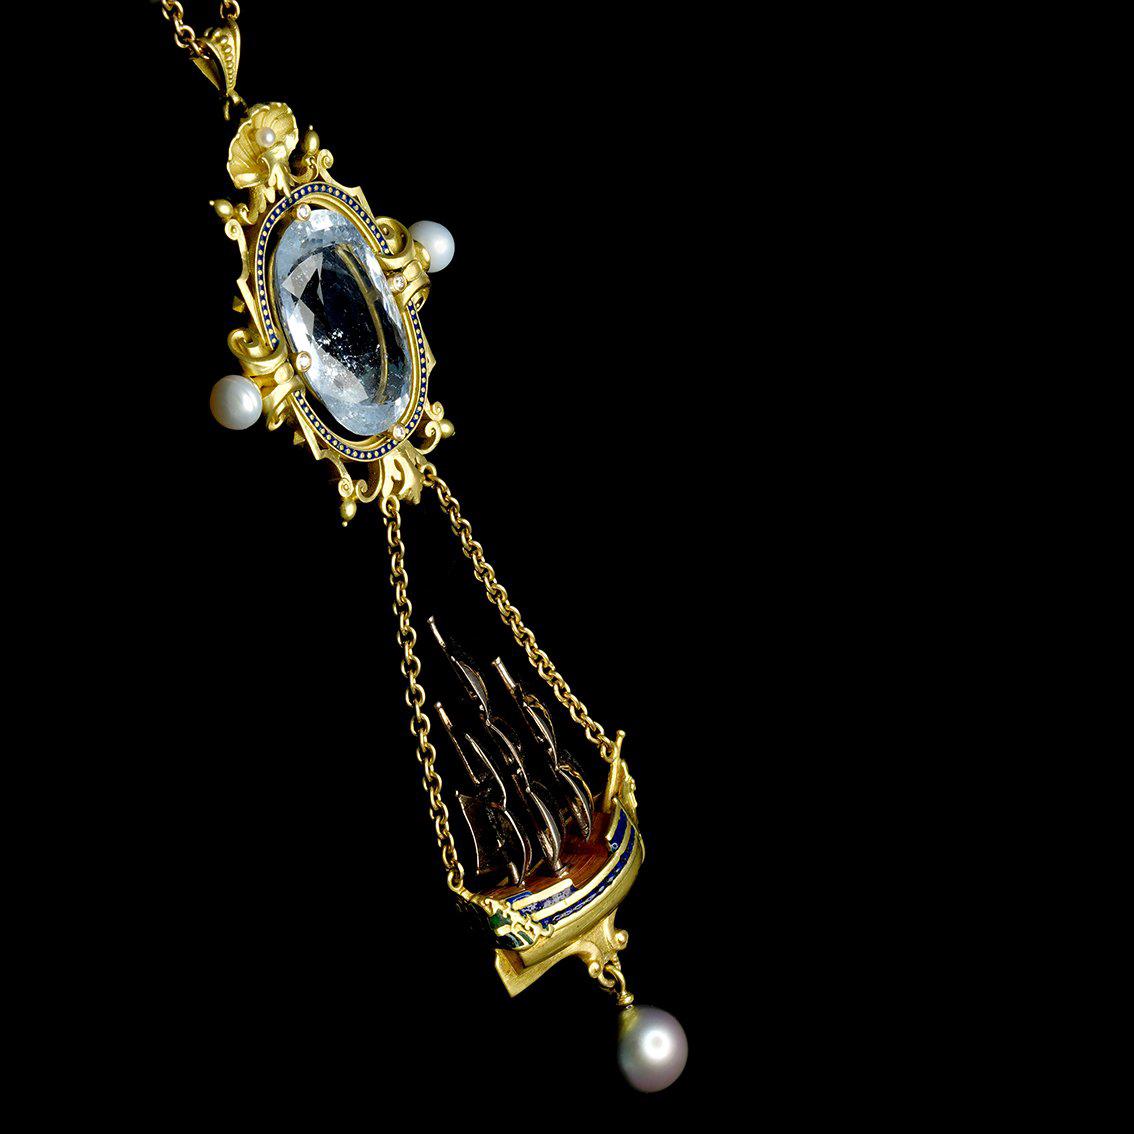 Aquamarine, Diamonds, Pearls, Enamel, 18kt Gold Antique Style Pendant Necklace For Sale 8